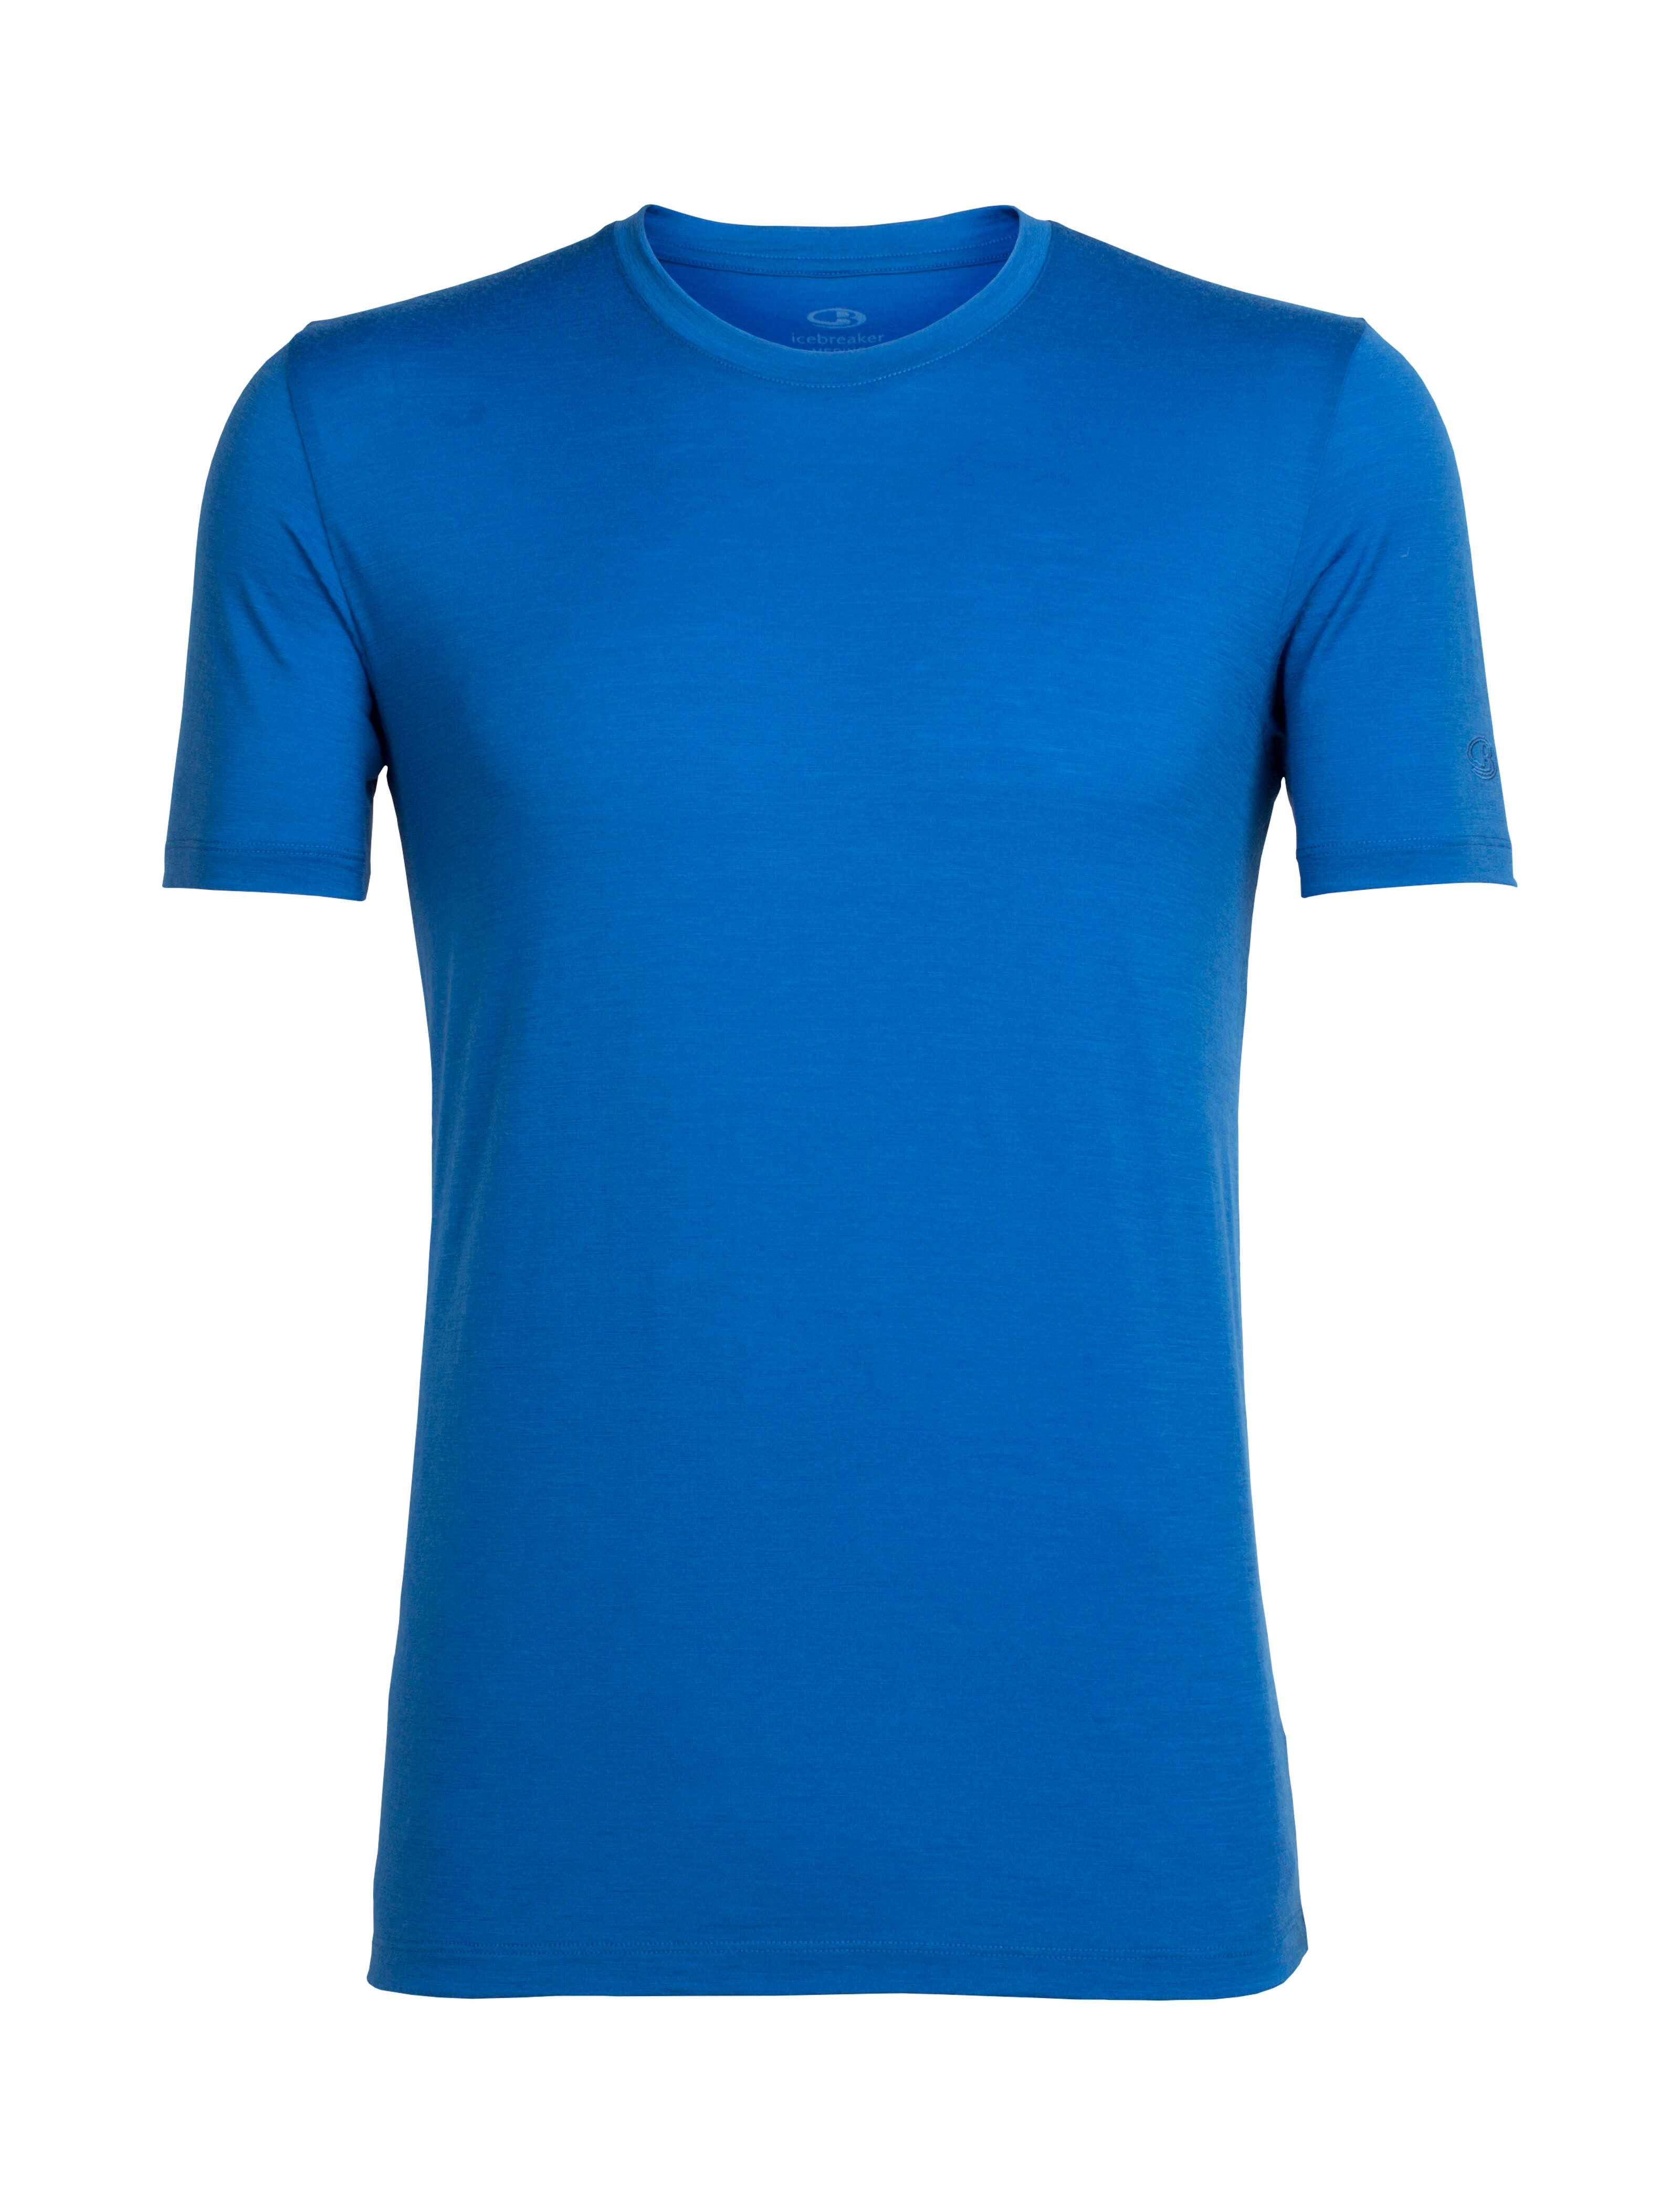 Icebreaker - Tech Lite Short Sleeve Crewe - Camiseta - Hombre